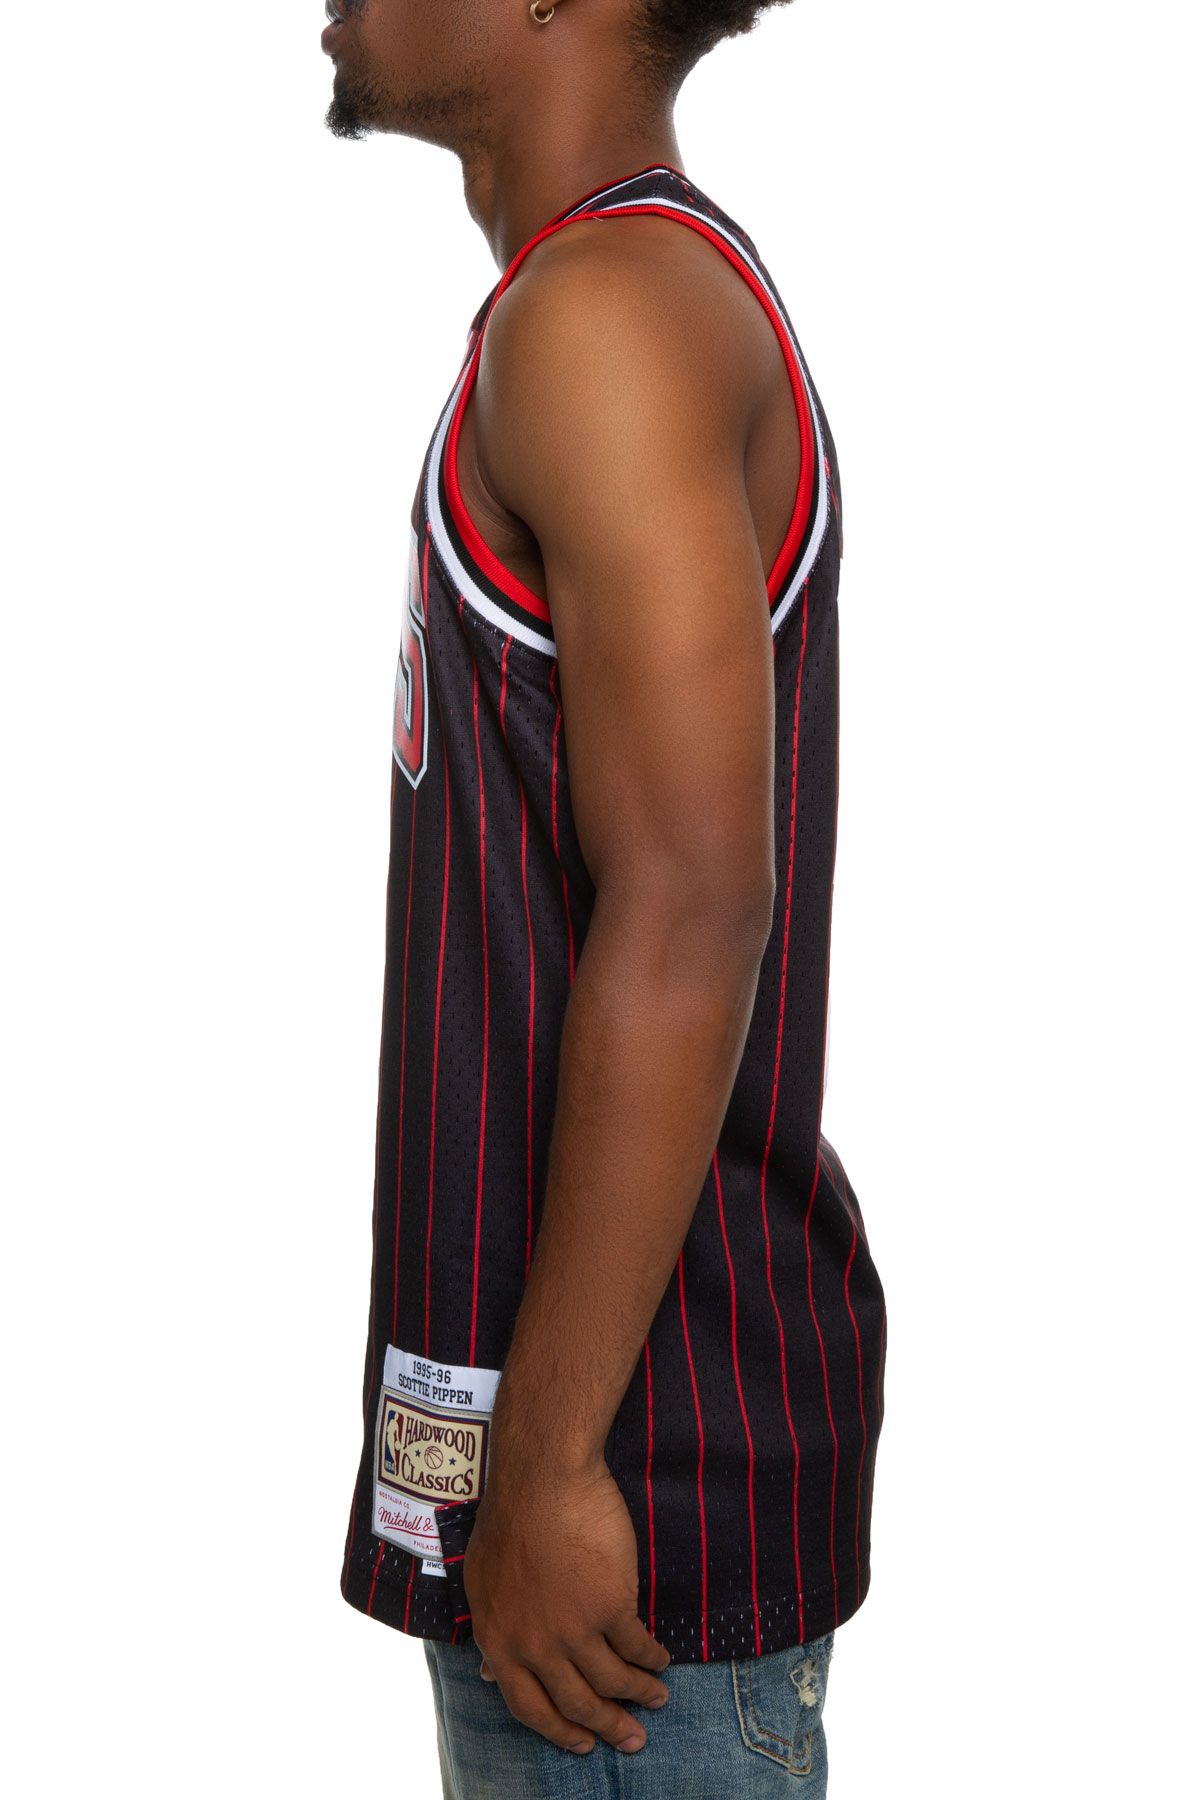  Scottie Pippen Chicago Bulls Mitchell & Ness Swingman Jersey  White (Medium) : Sports & Outdoors